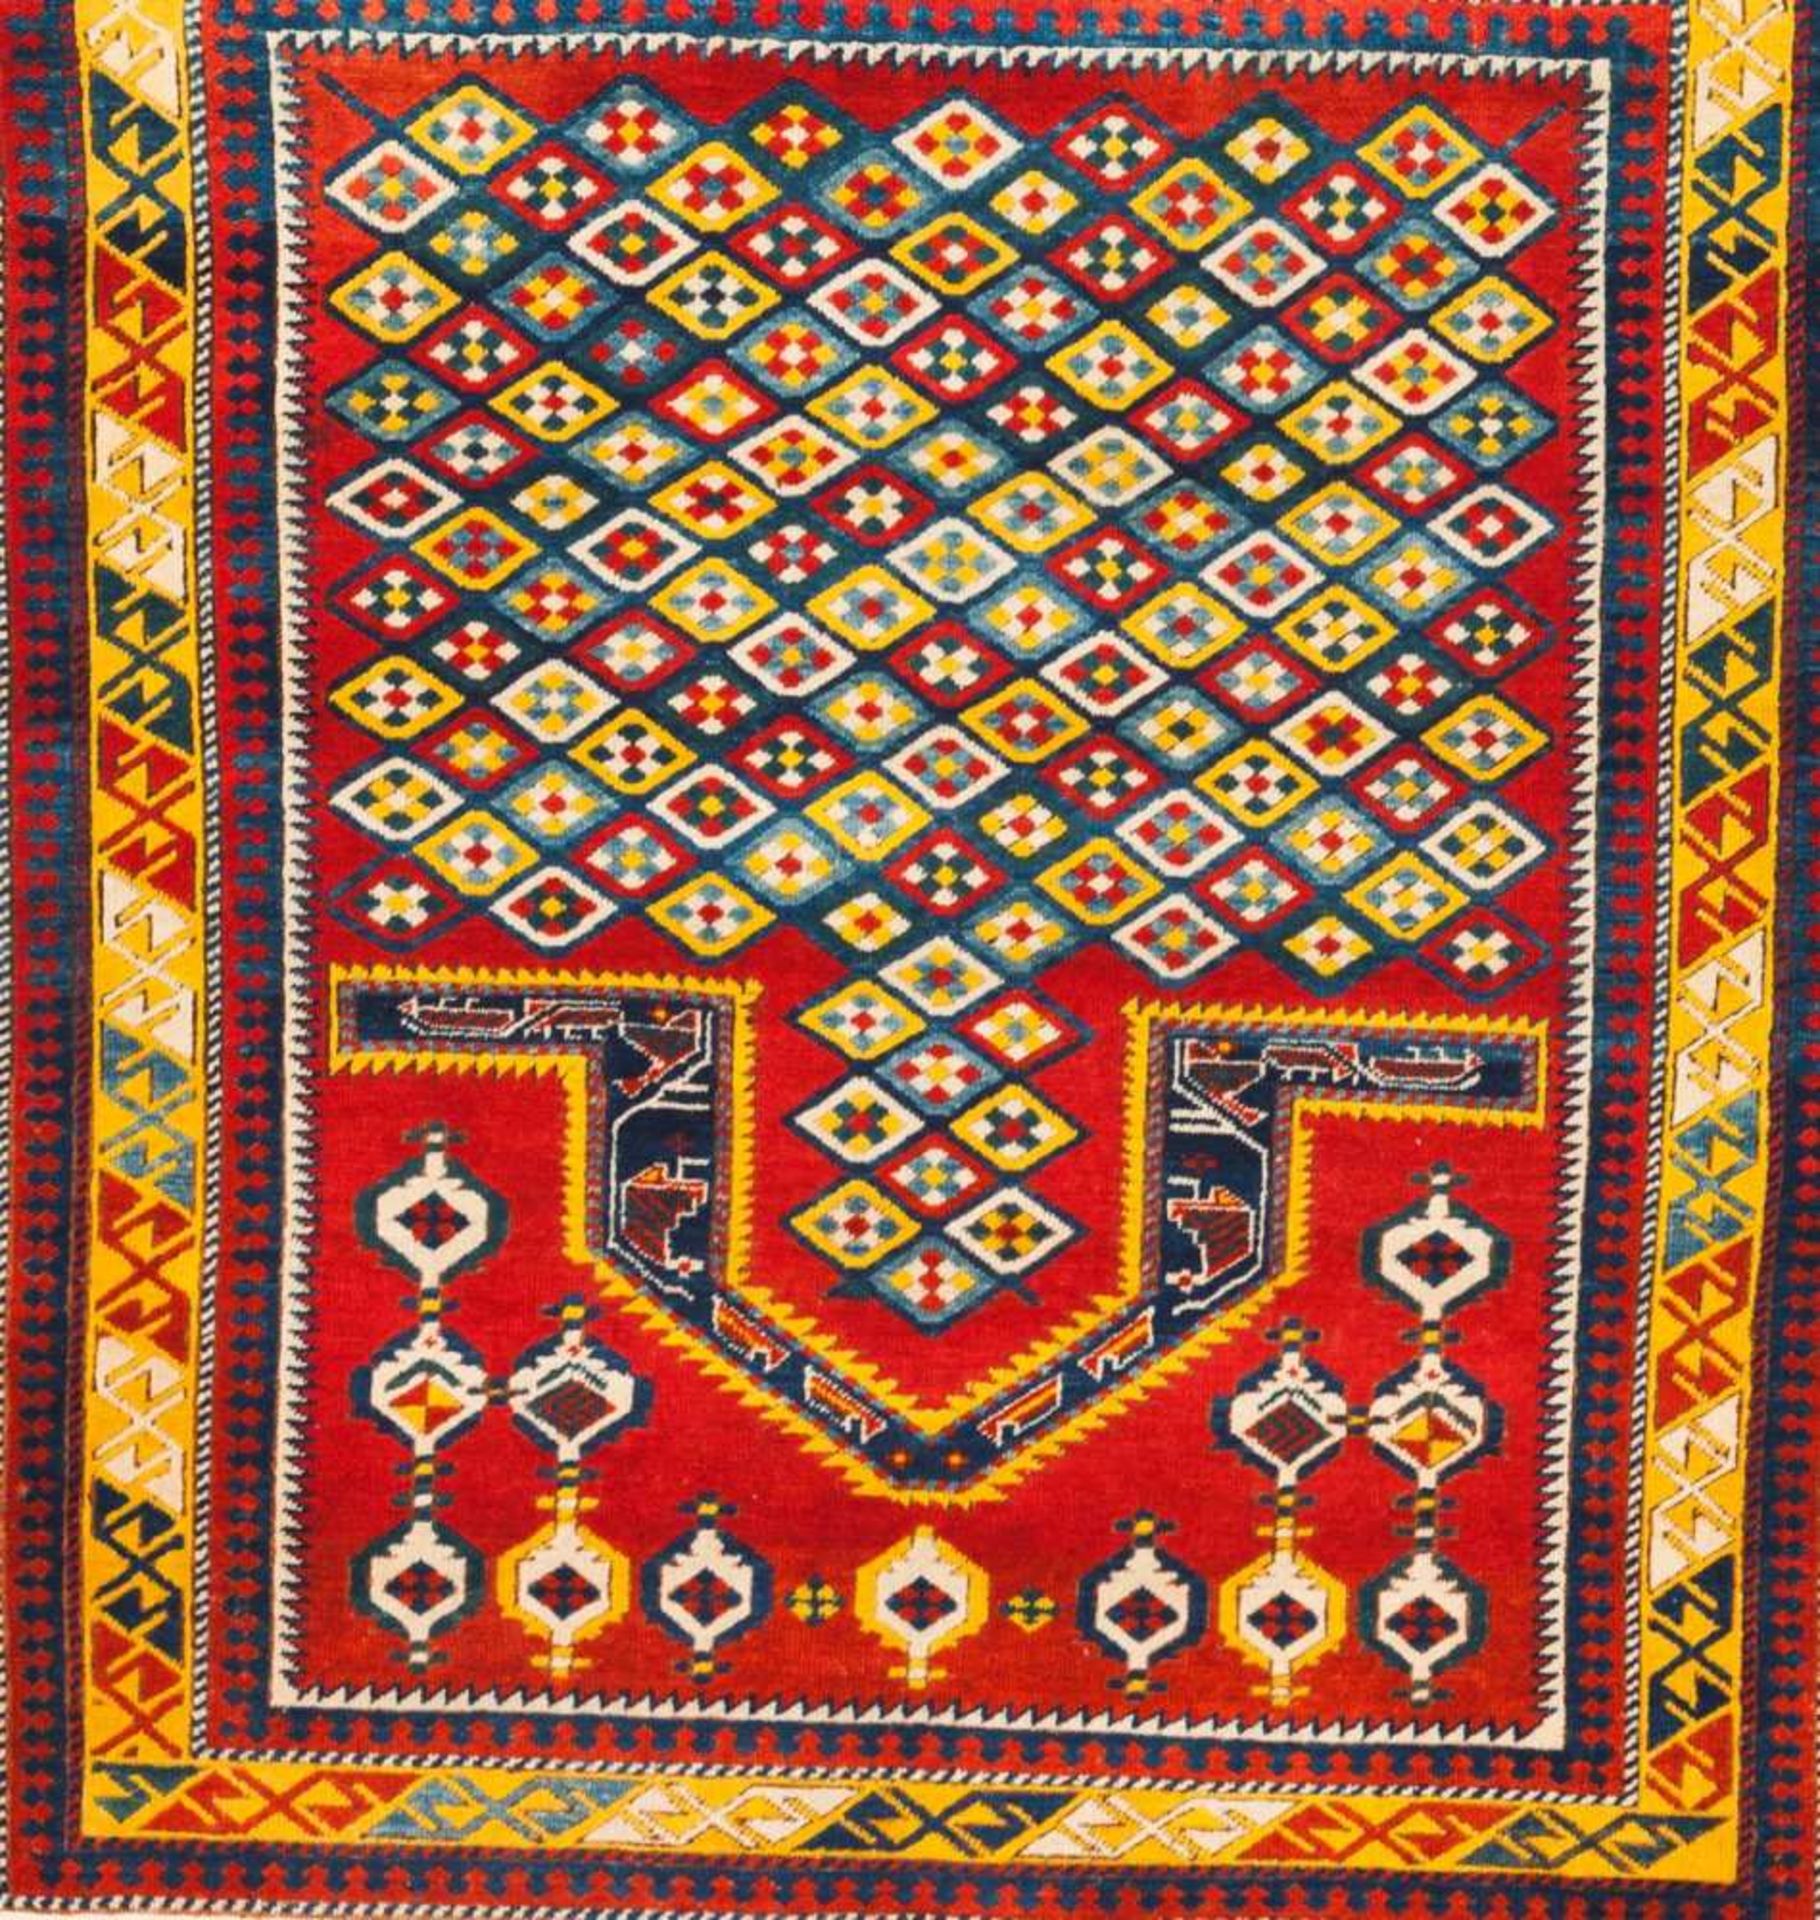 A Kazak design praying carpet Cotton and wool Blue, yellow, white and red decoration Pakistan